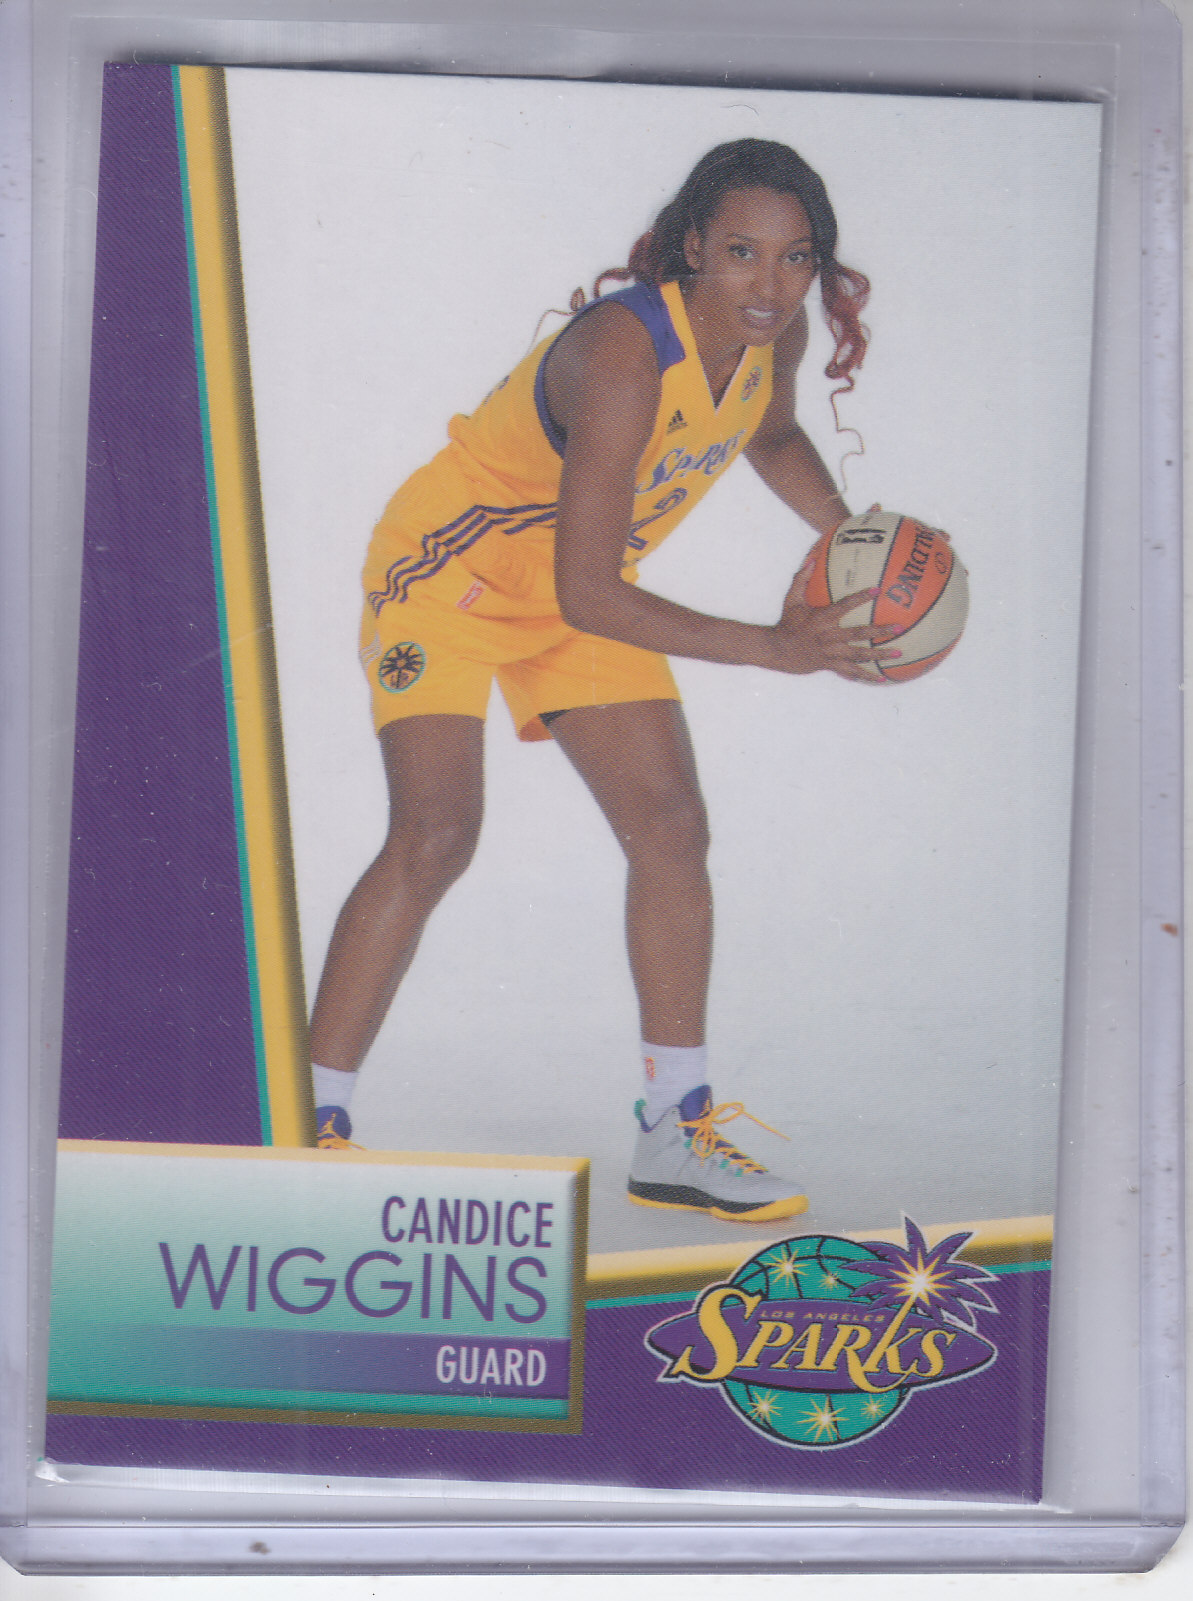  Candice Wiggins player image